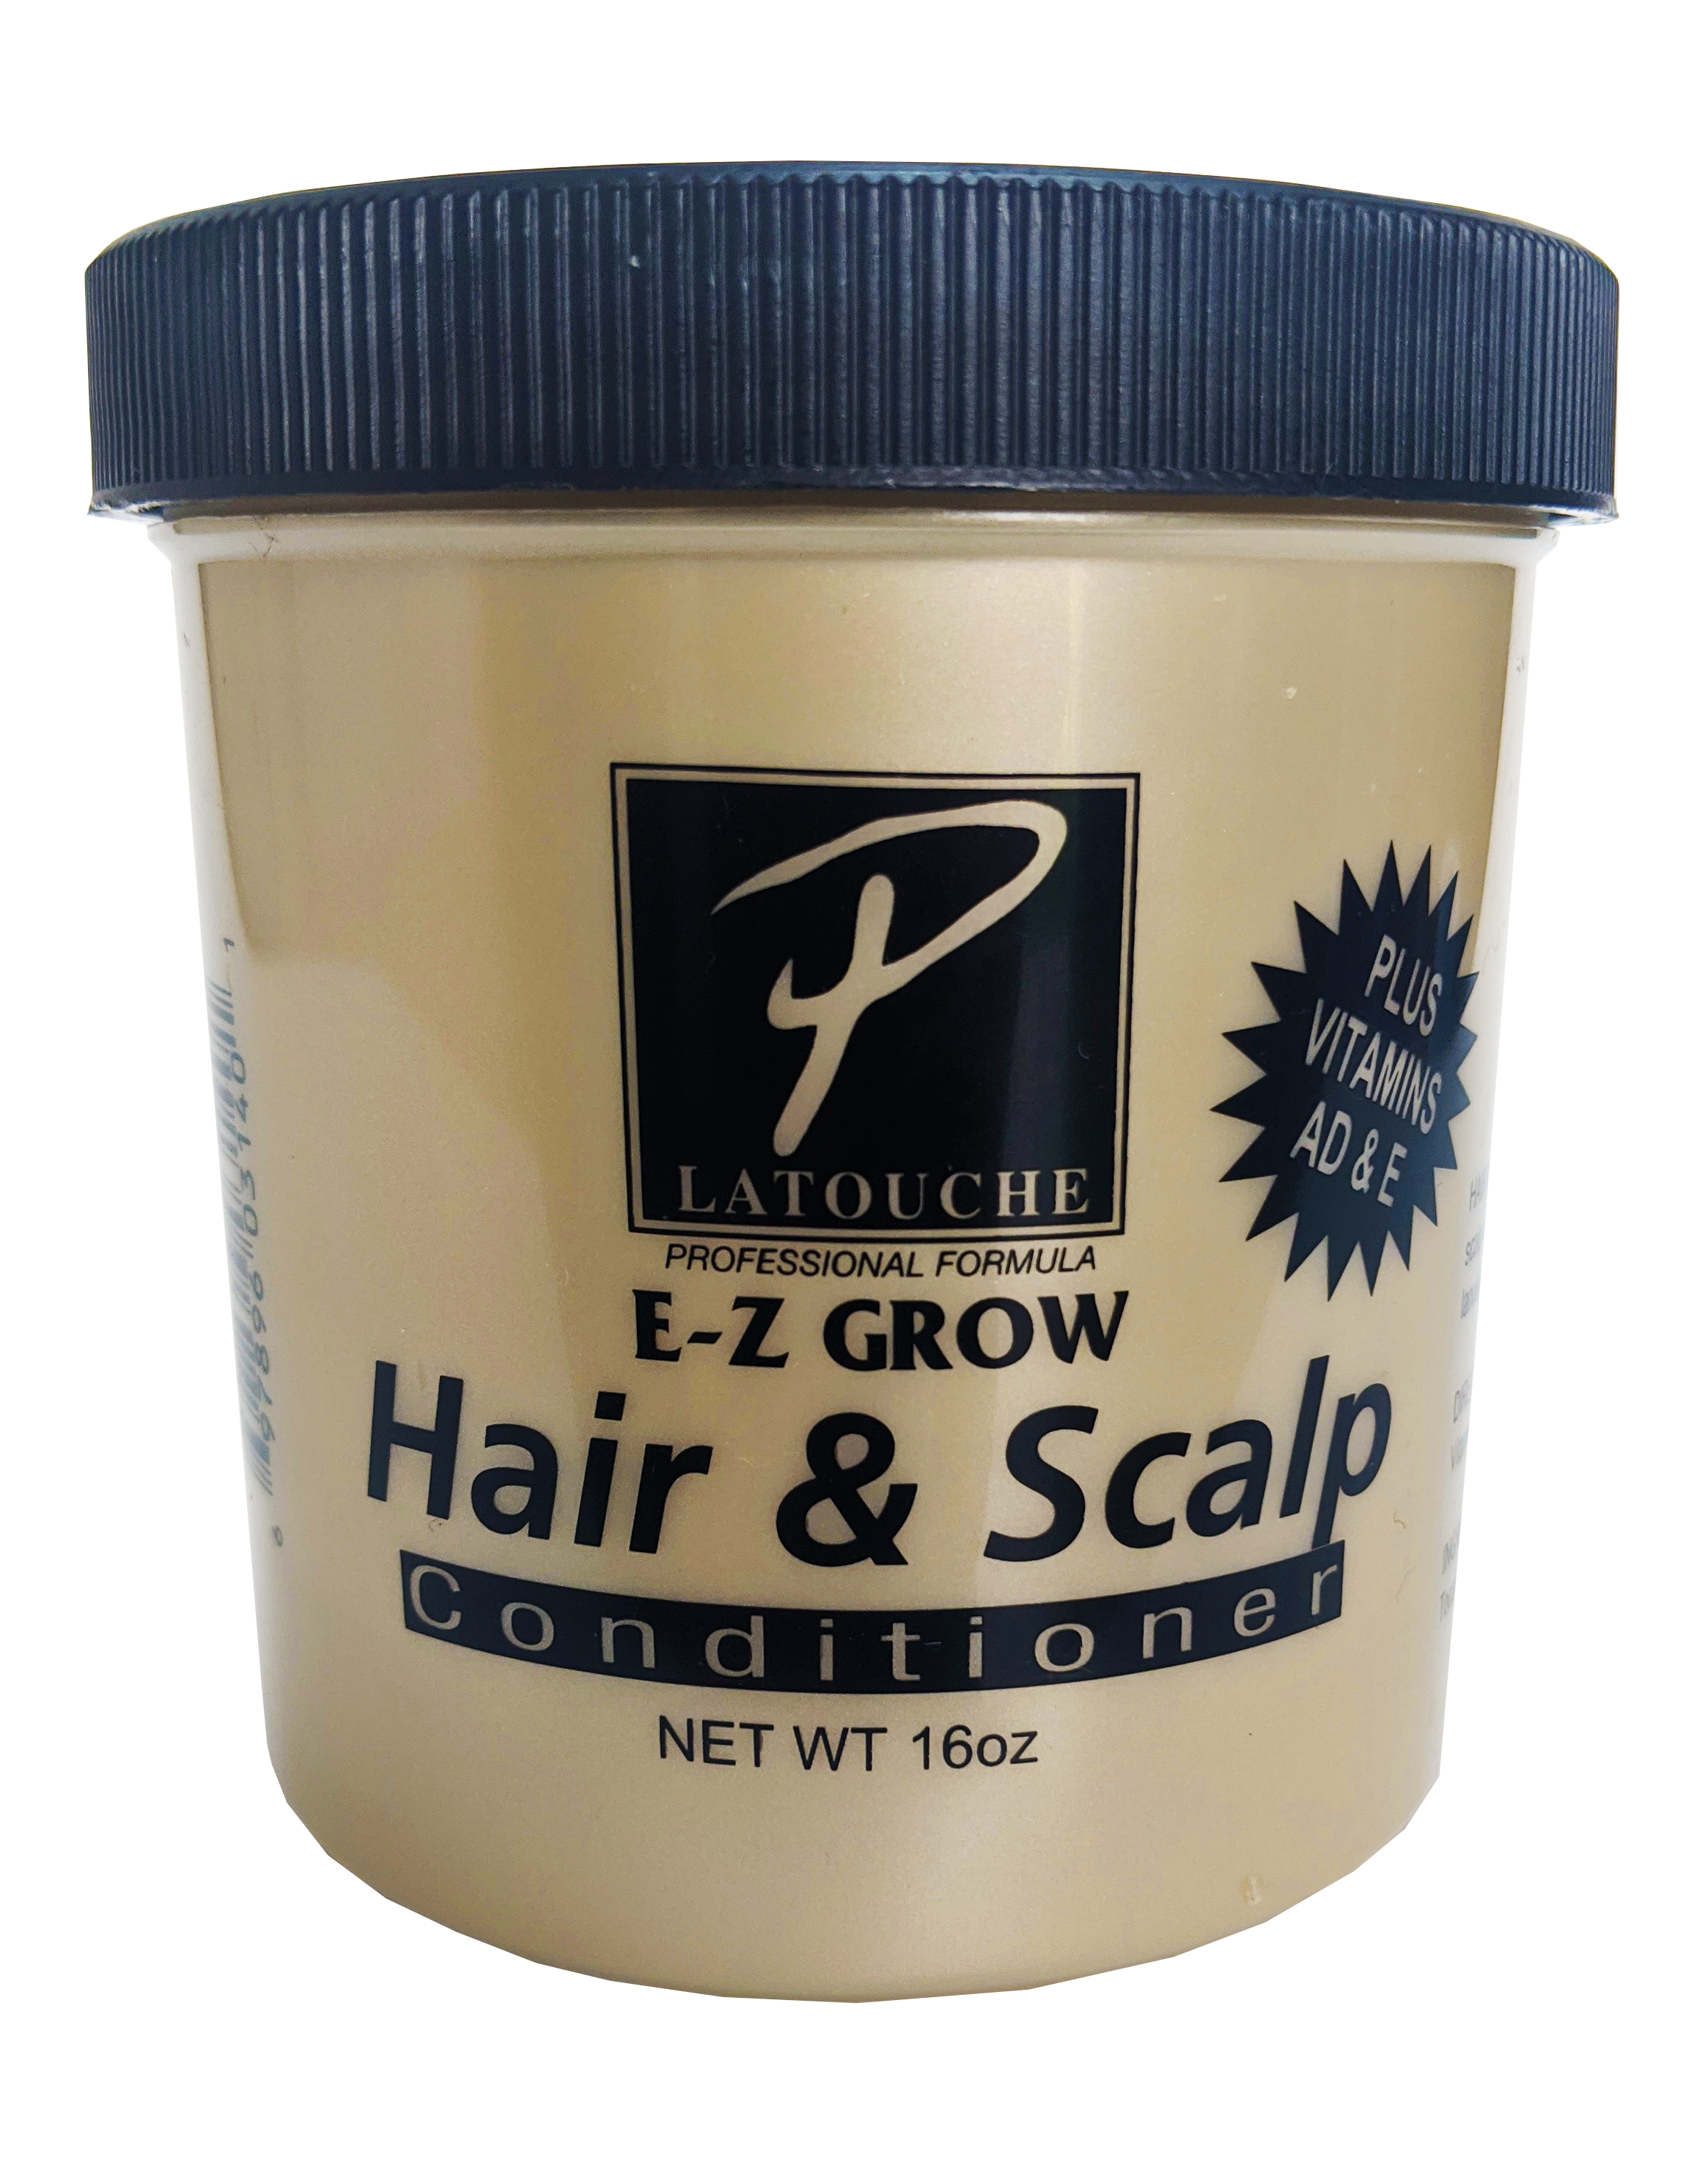 Pierre La Touche E-Z Grow Hair & Scalp Conditioner